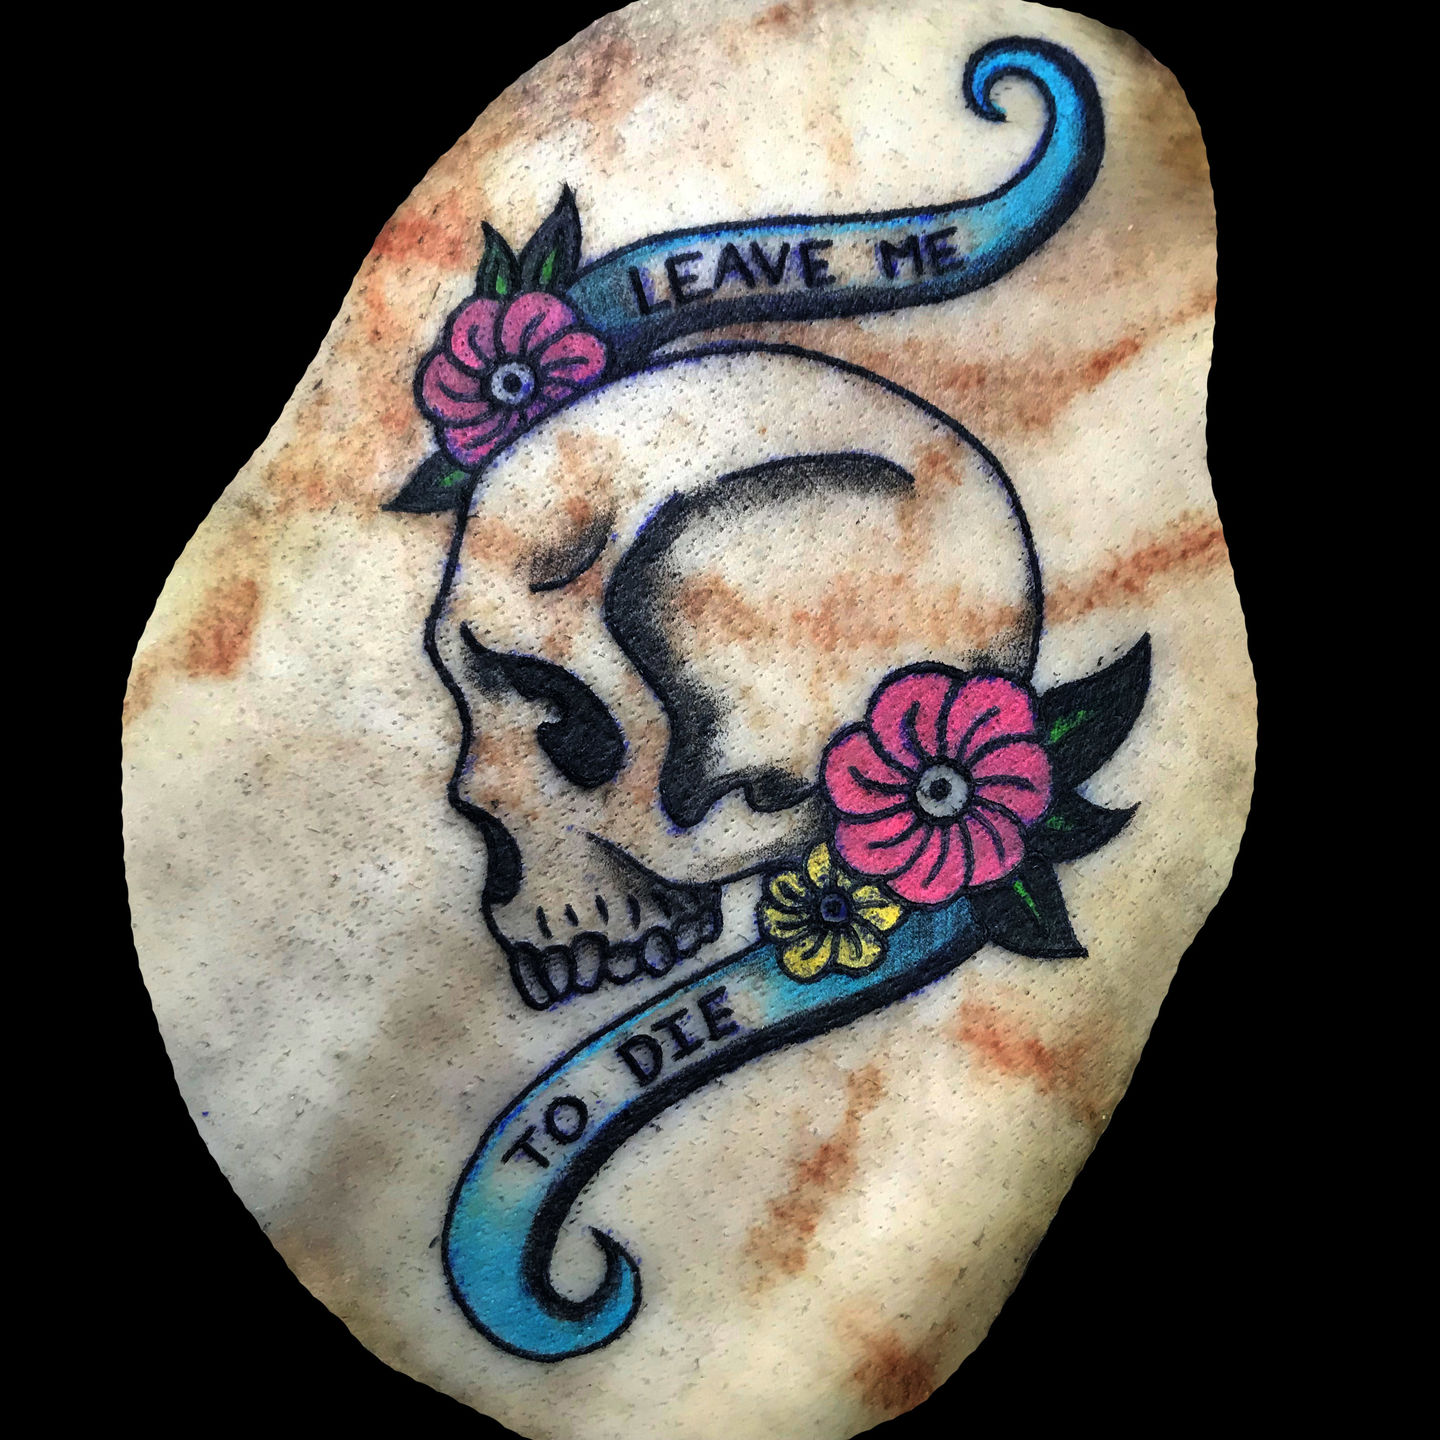 Practice tattoo - Pig ear 2 by BettyBoopEyes on DeviantArt